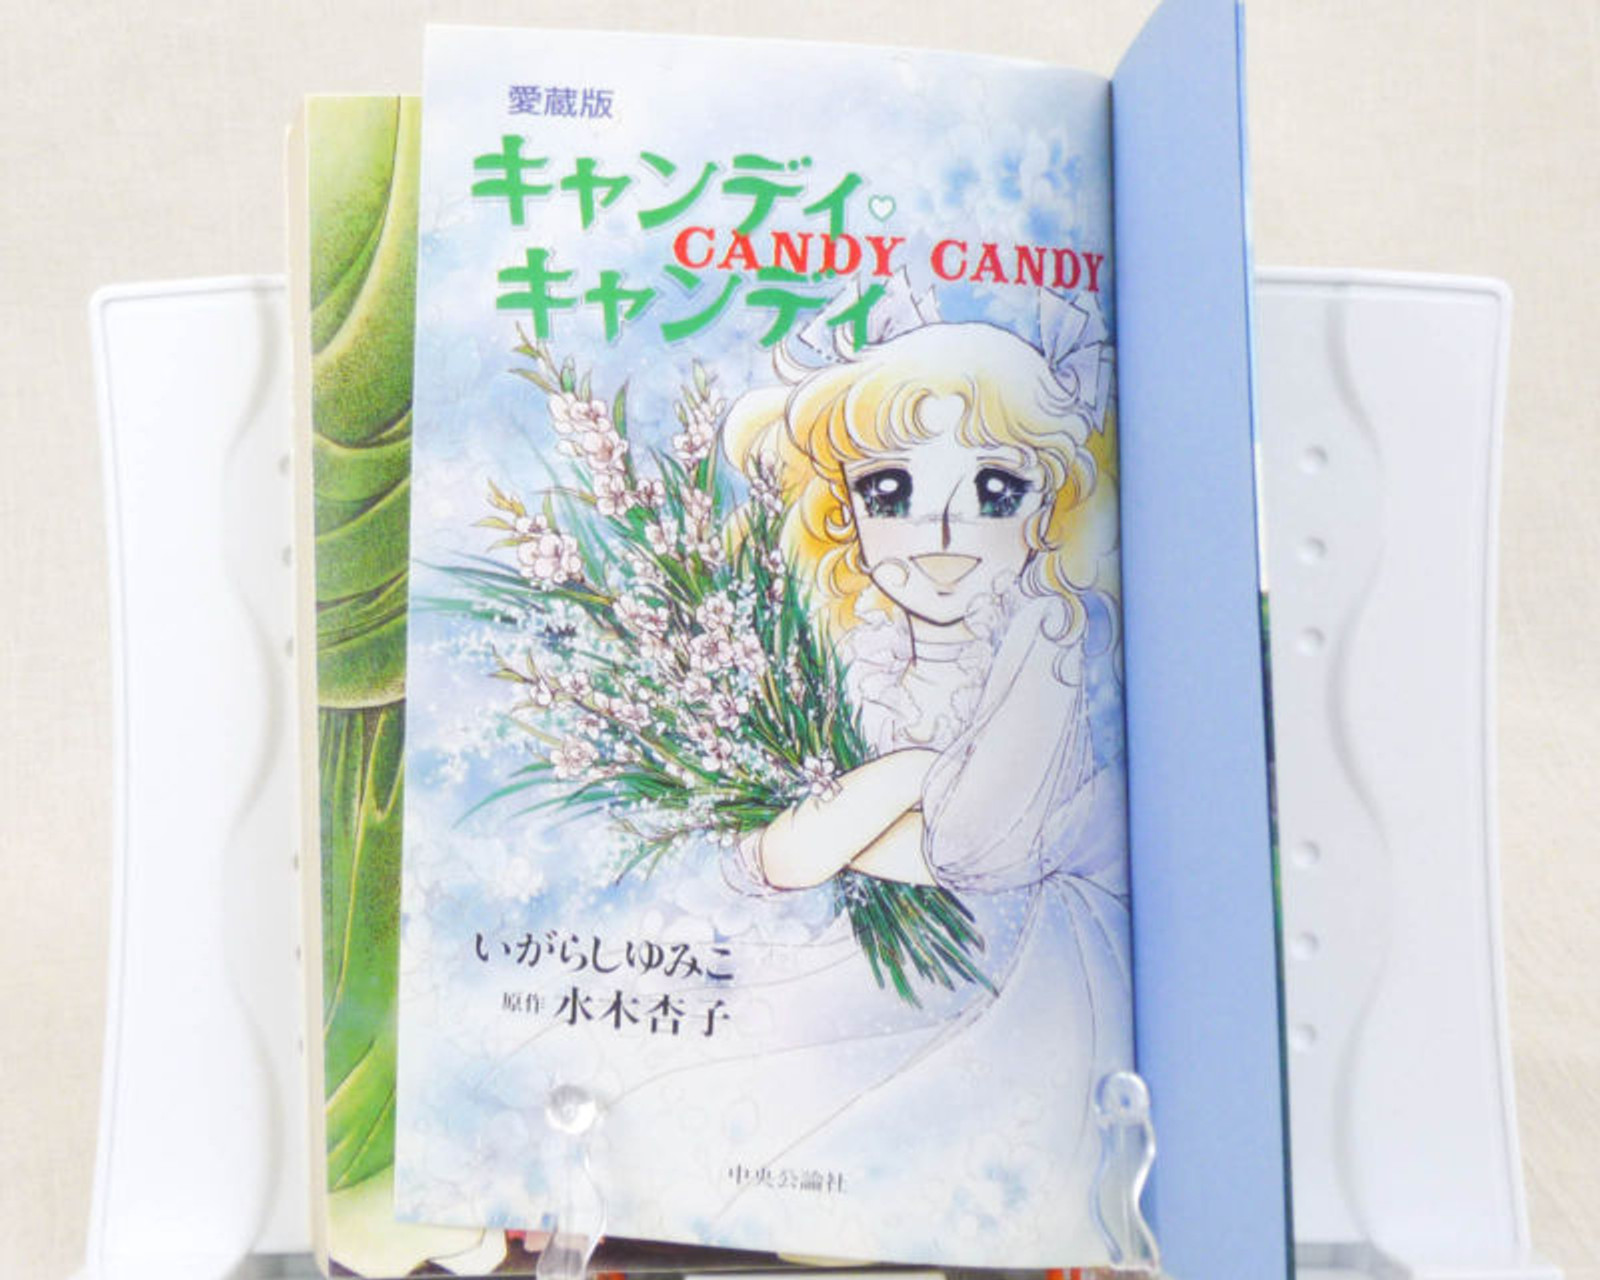 RARE! Candy Candy Comics Vol.1+2 Complete Set Yumiko Igarashi JAPAN ANIME MANGA